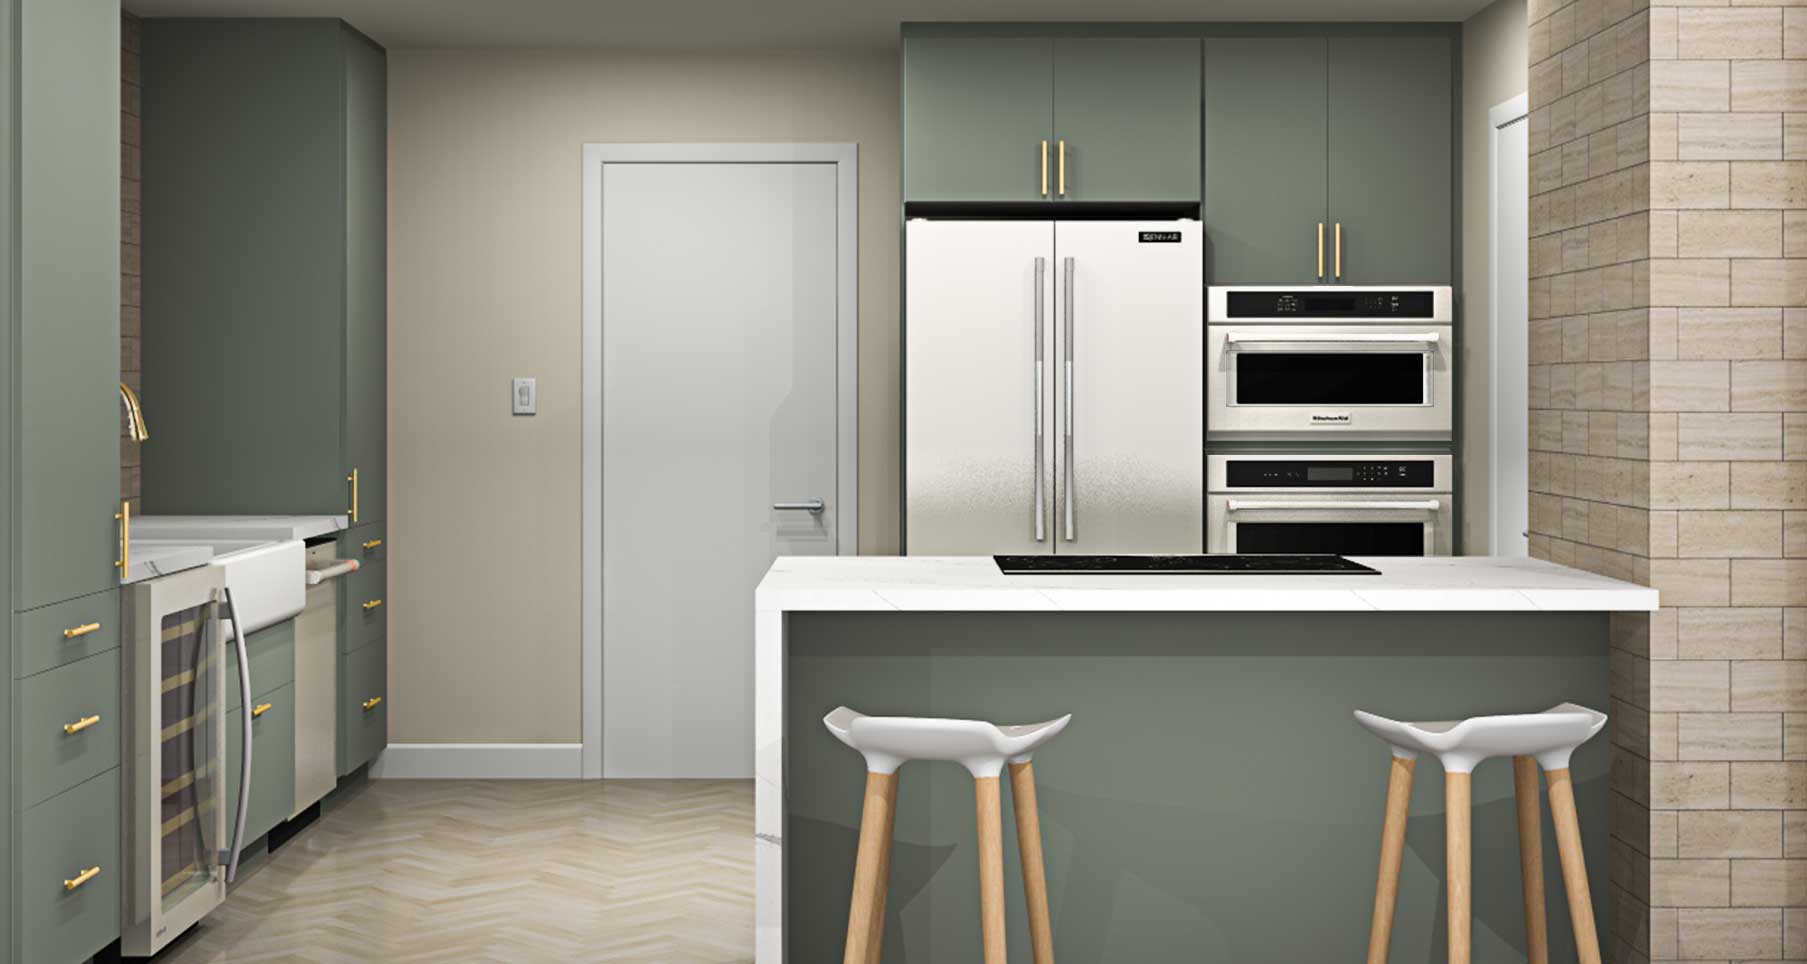 https://inspiredkitchendesign.com/wp-content/uploads/2021/08/1-understanding-appliances-in-your-ikea-kitchen.jpg